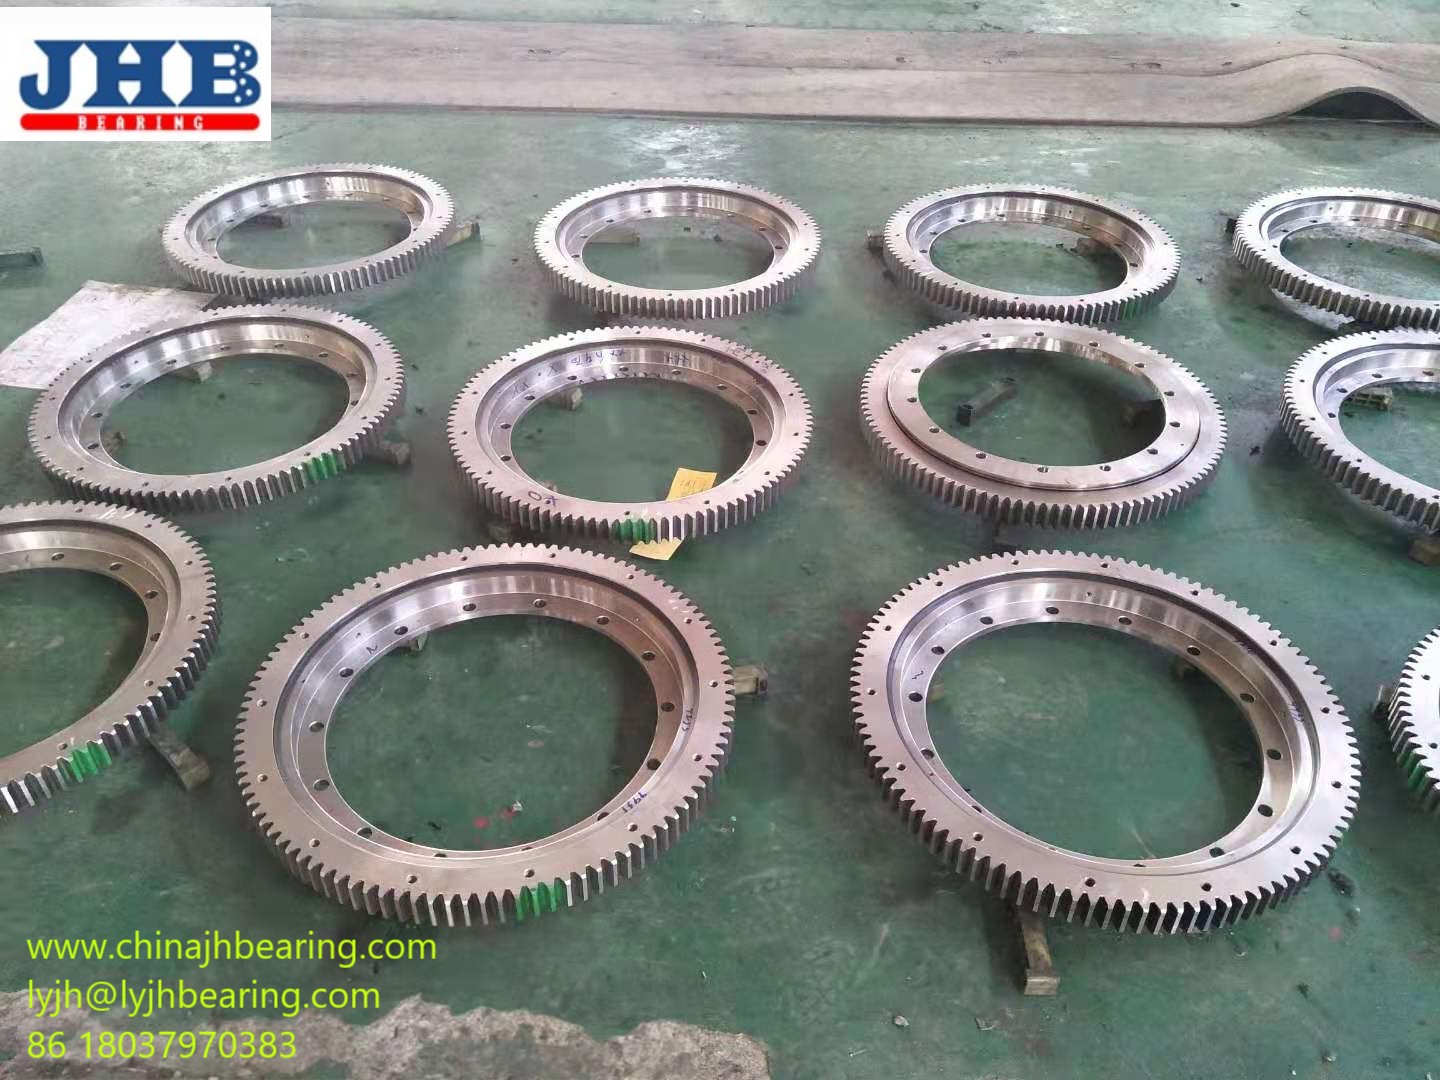 VSA 251055 N slewing bearing for Industrial machinery 1198*955*80mm with external teeth